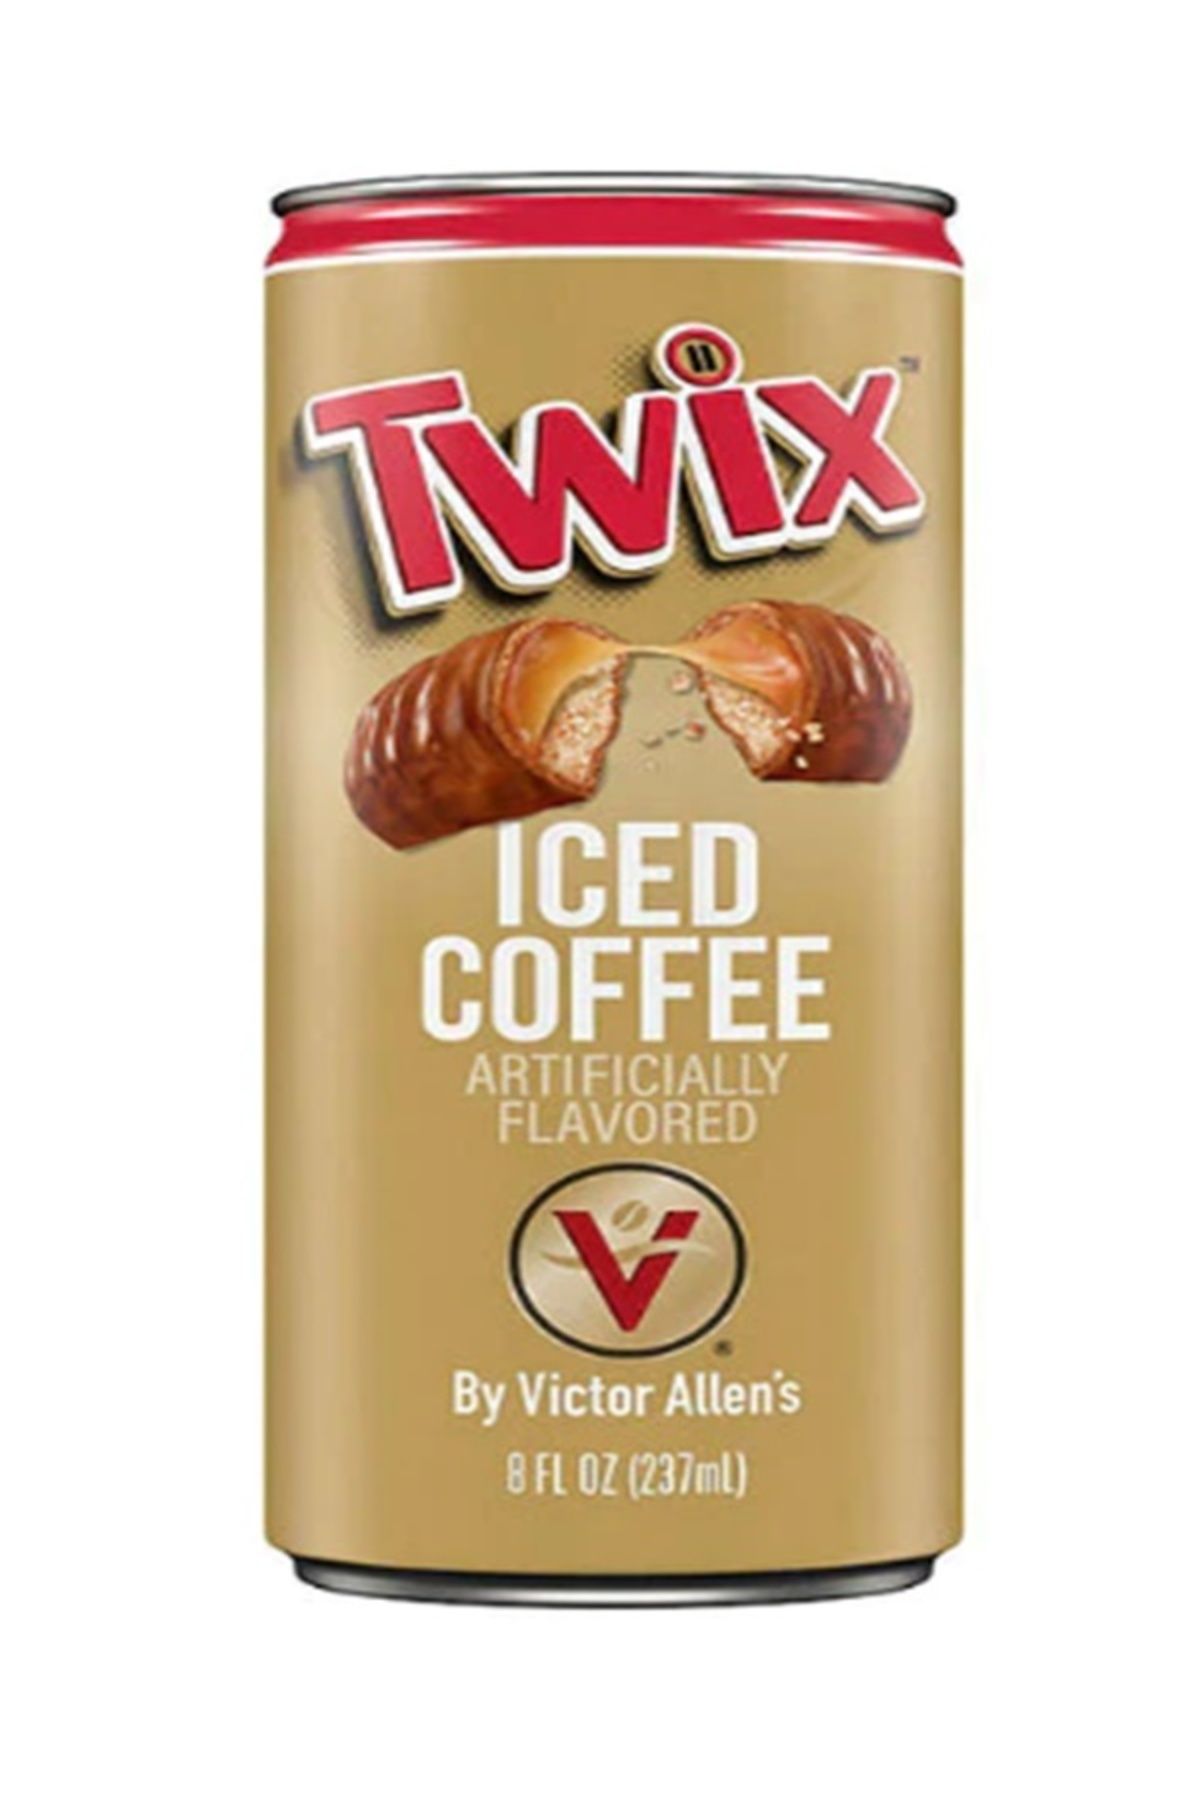 Twix Iced Coffee 237ml